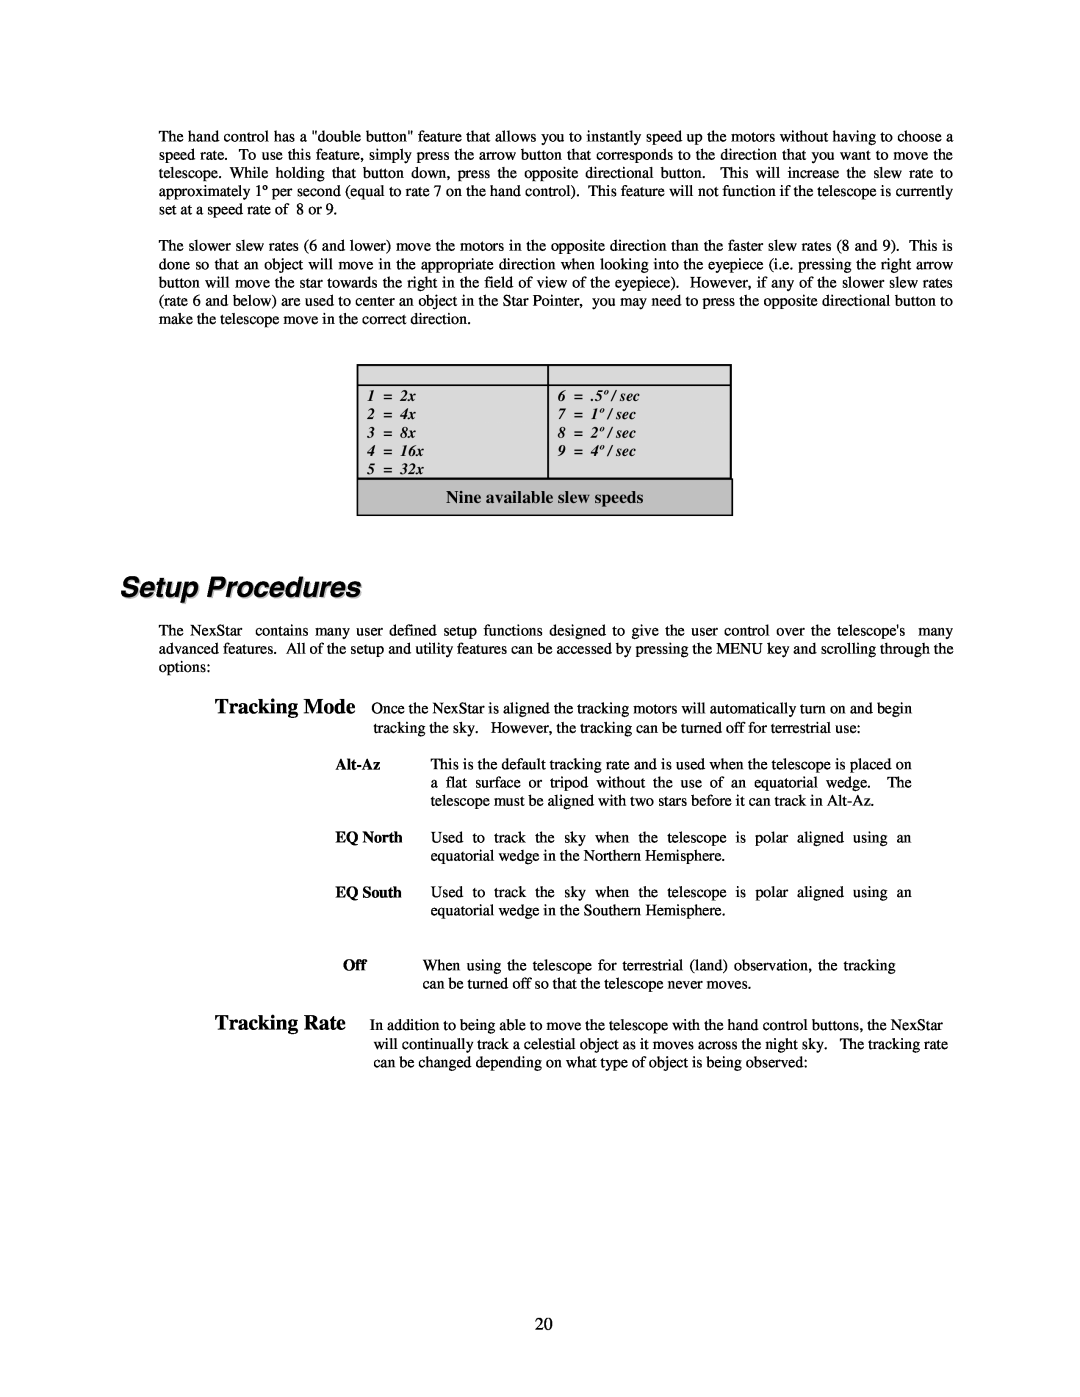 Celestron NexStar HC manual Setup Procedures, Nine available slew speeds, 1 = 2x 2 = 4x 3 = 4 = 5 = 